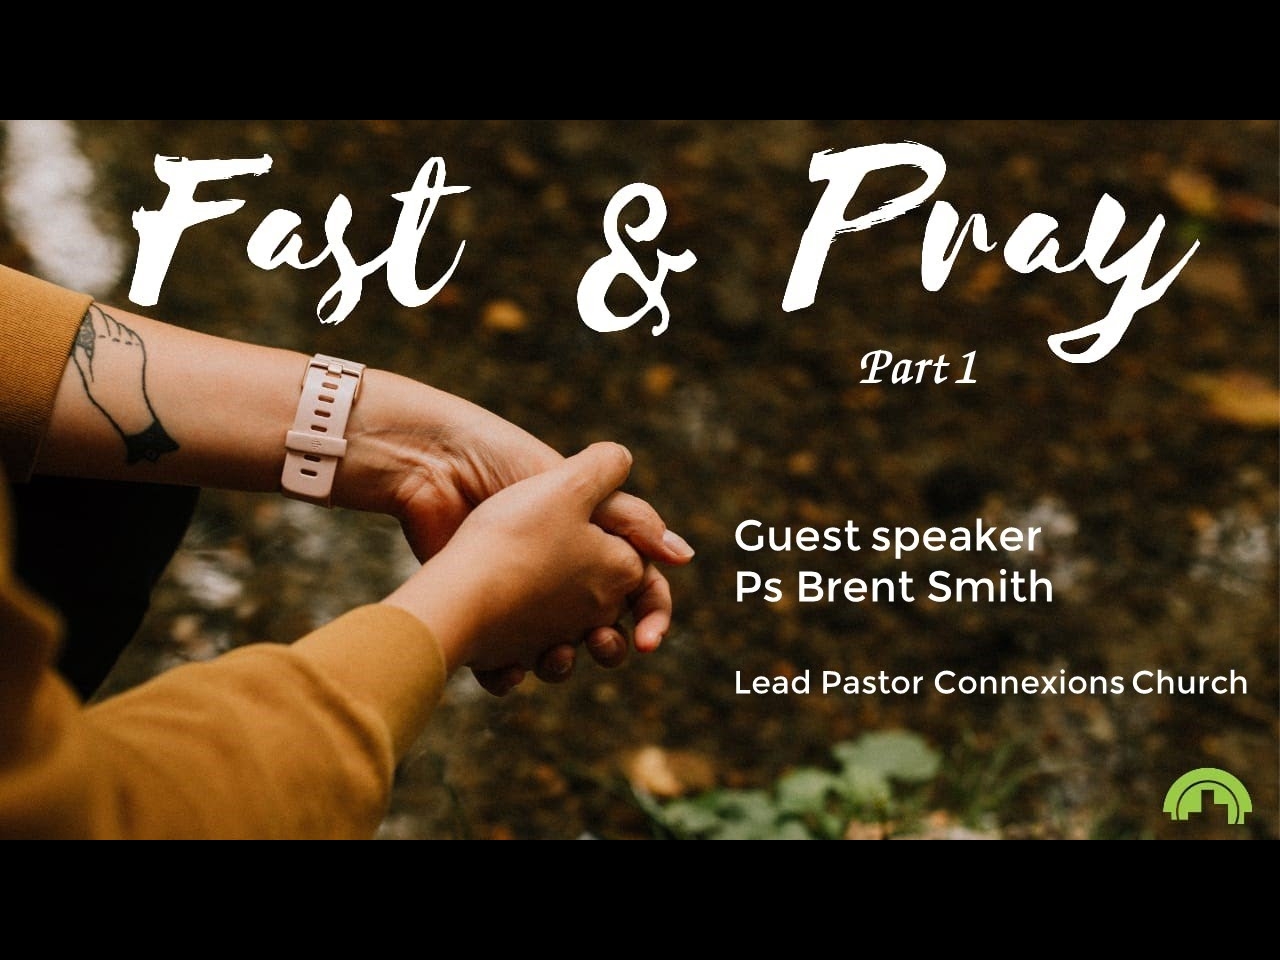 Fast & Pray part 1